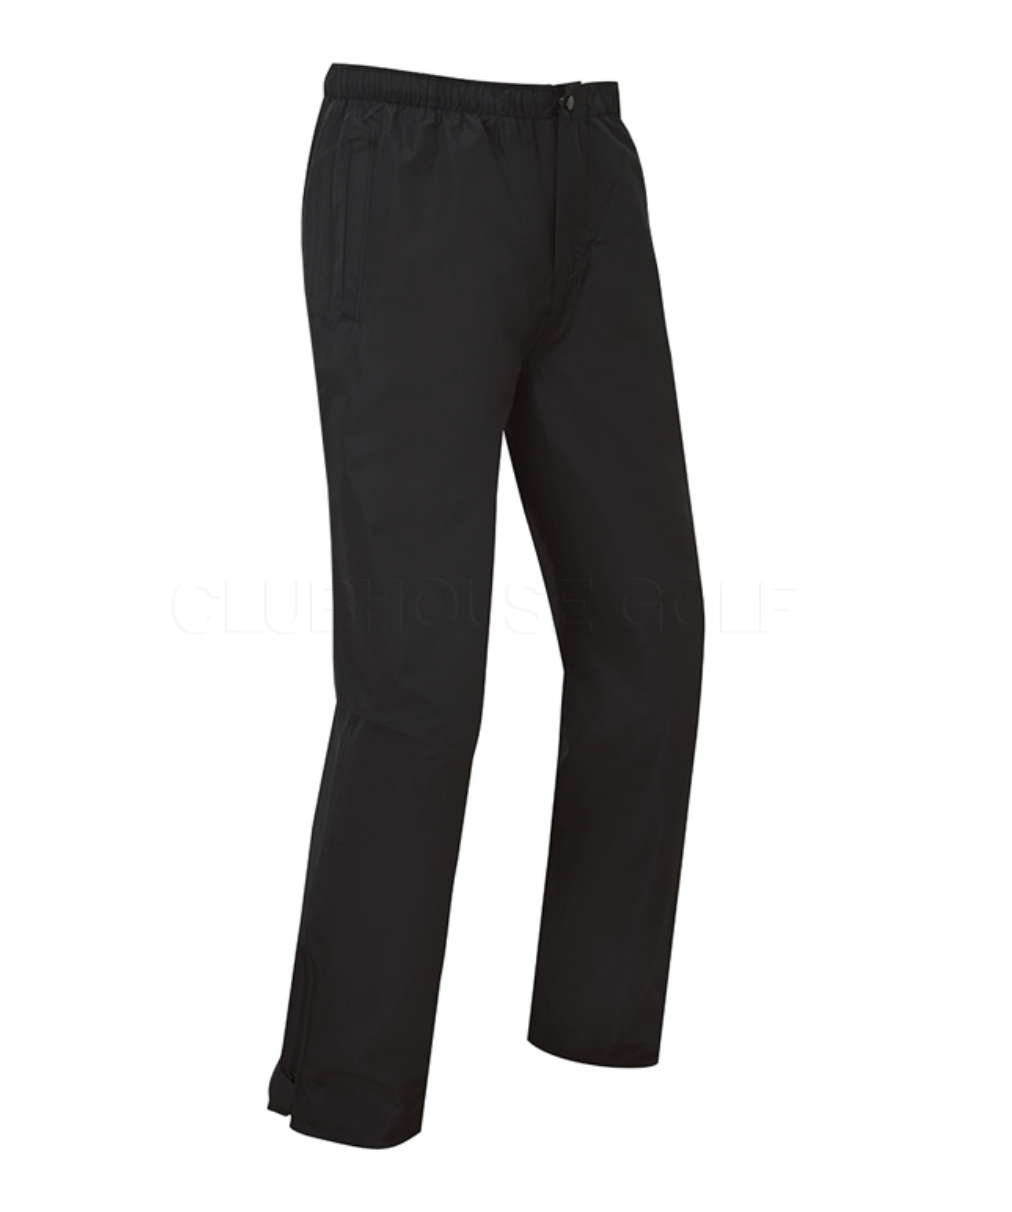 Buy Ladies Golf Pants online | Lazada.com.my